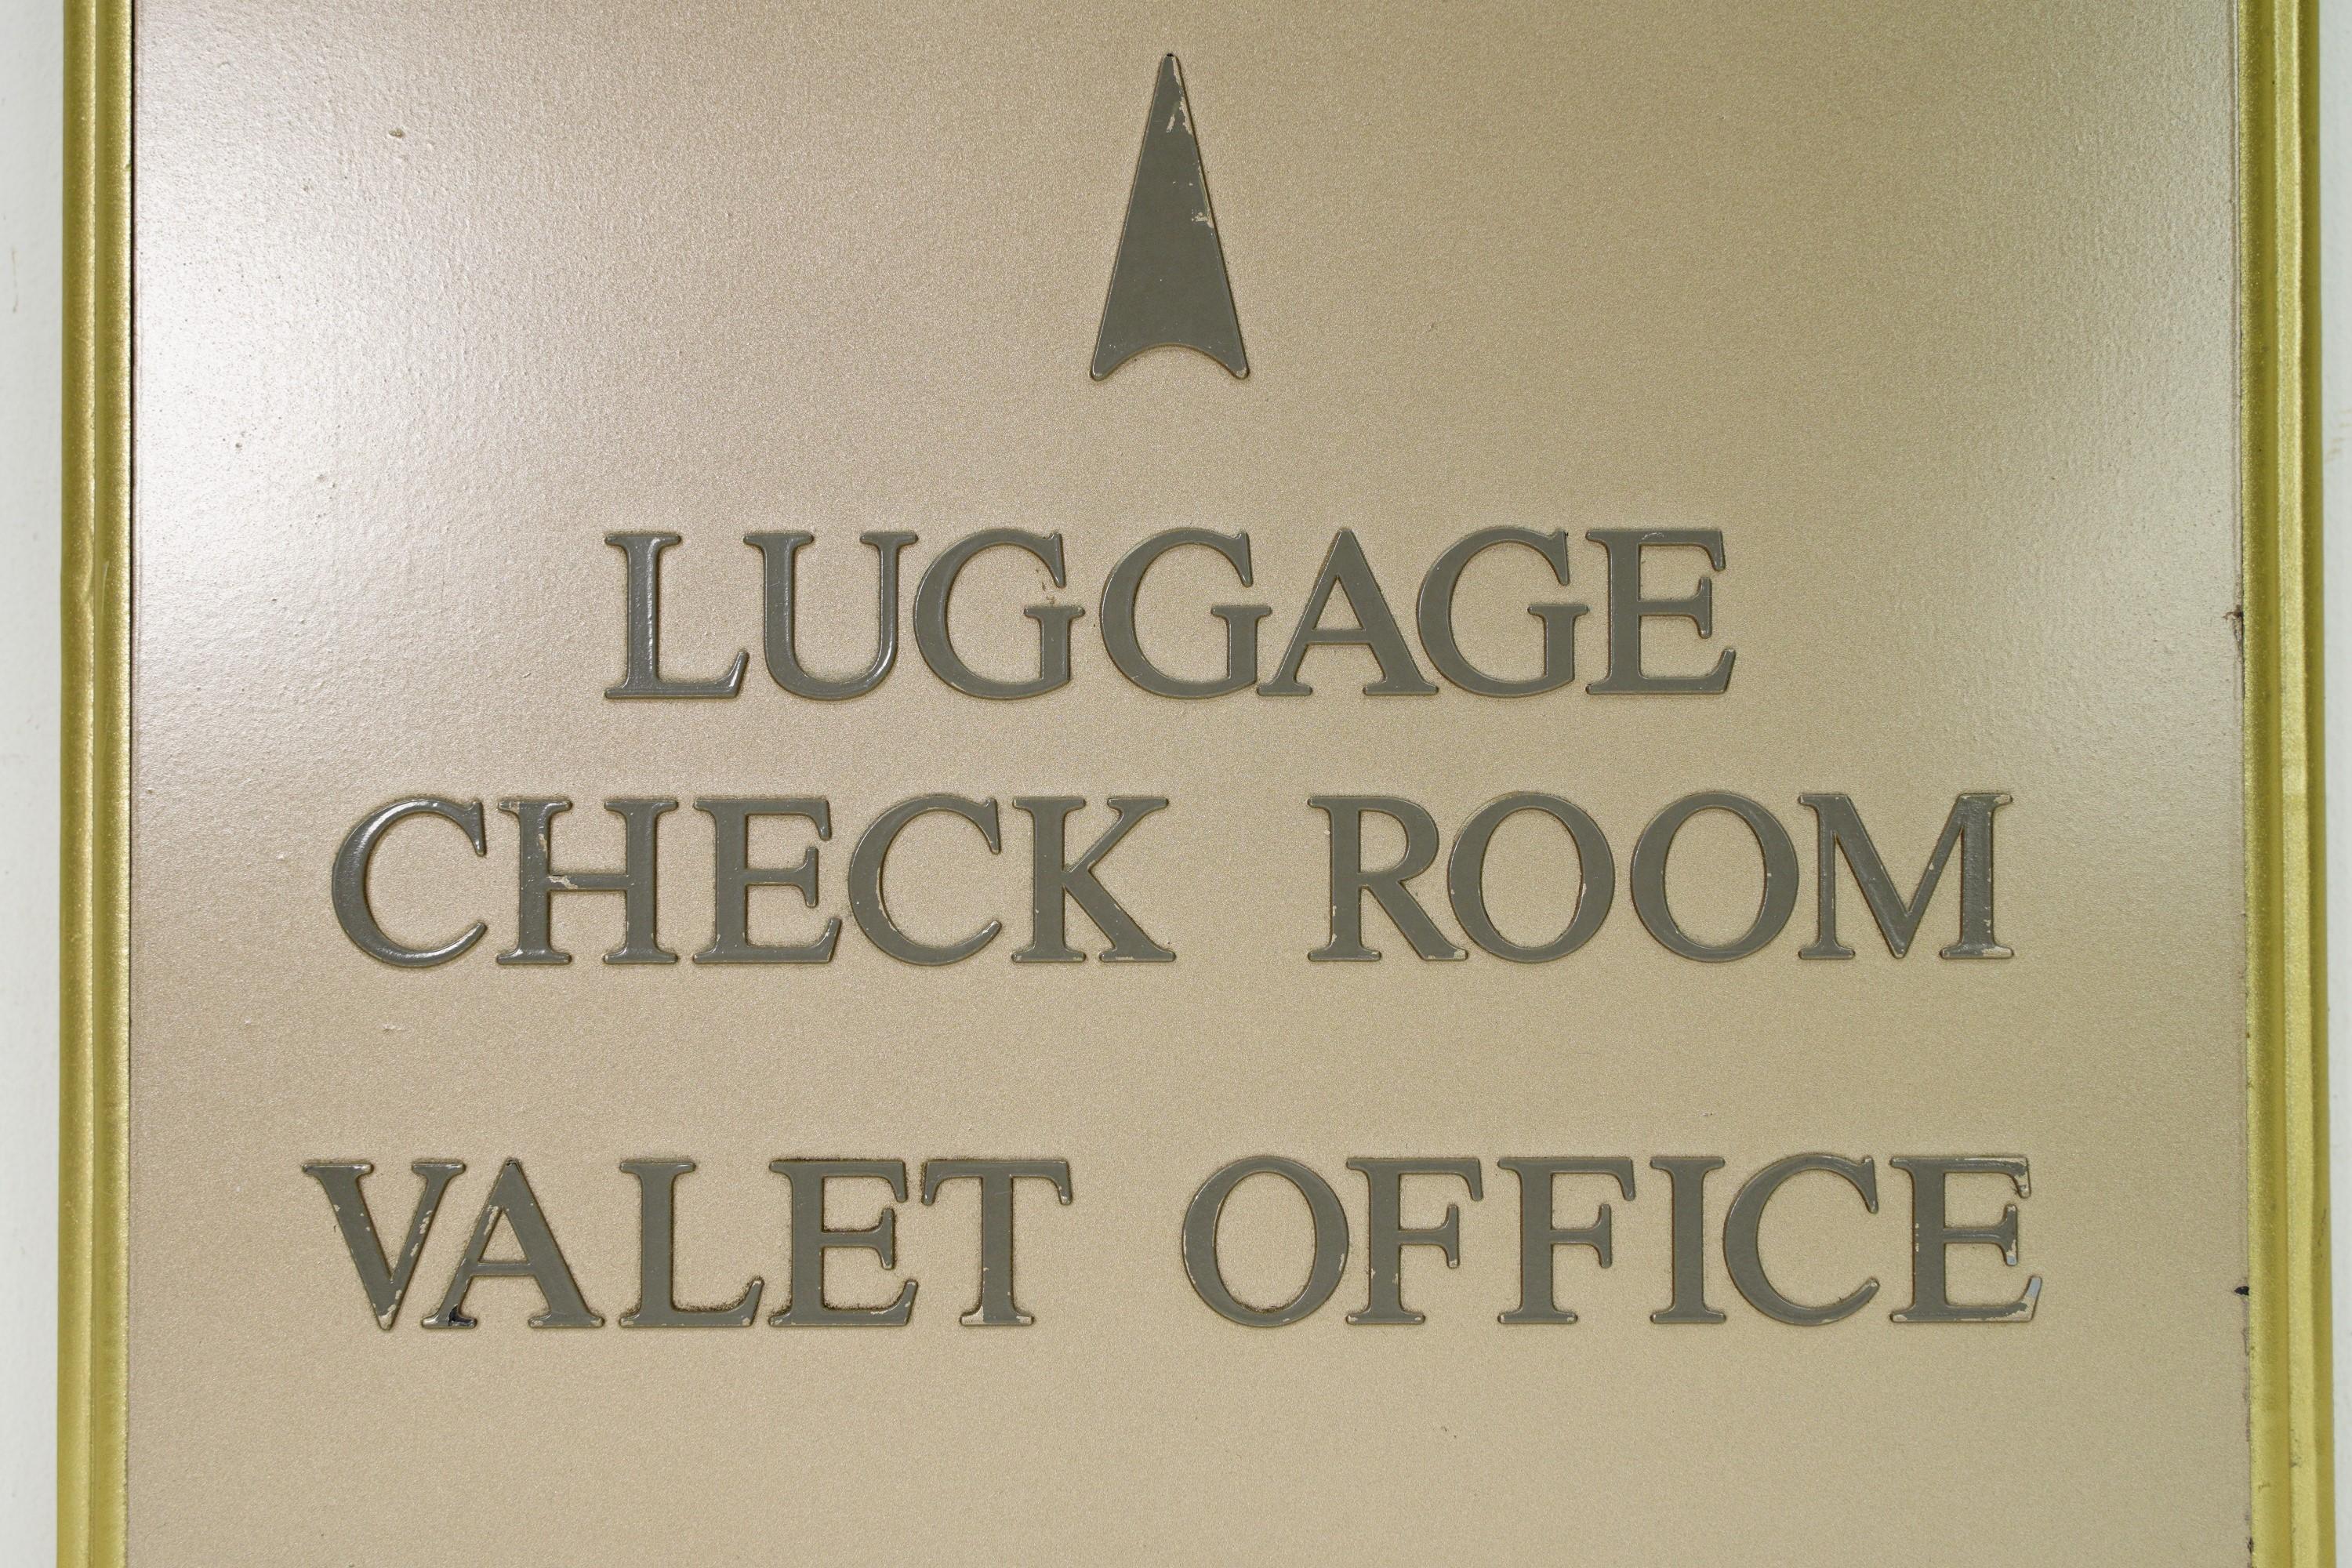 Waldorf Astoria Hotel Check Room Valet Office Sign 2